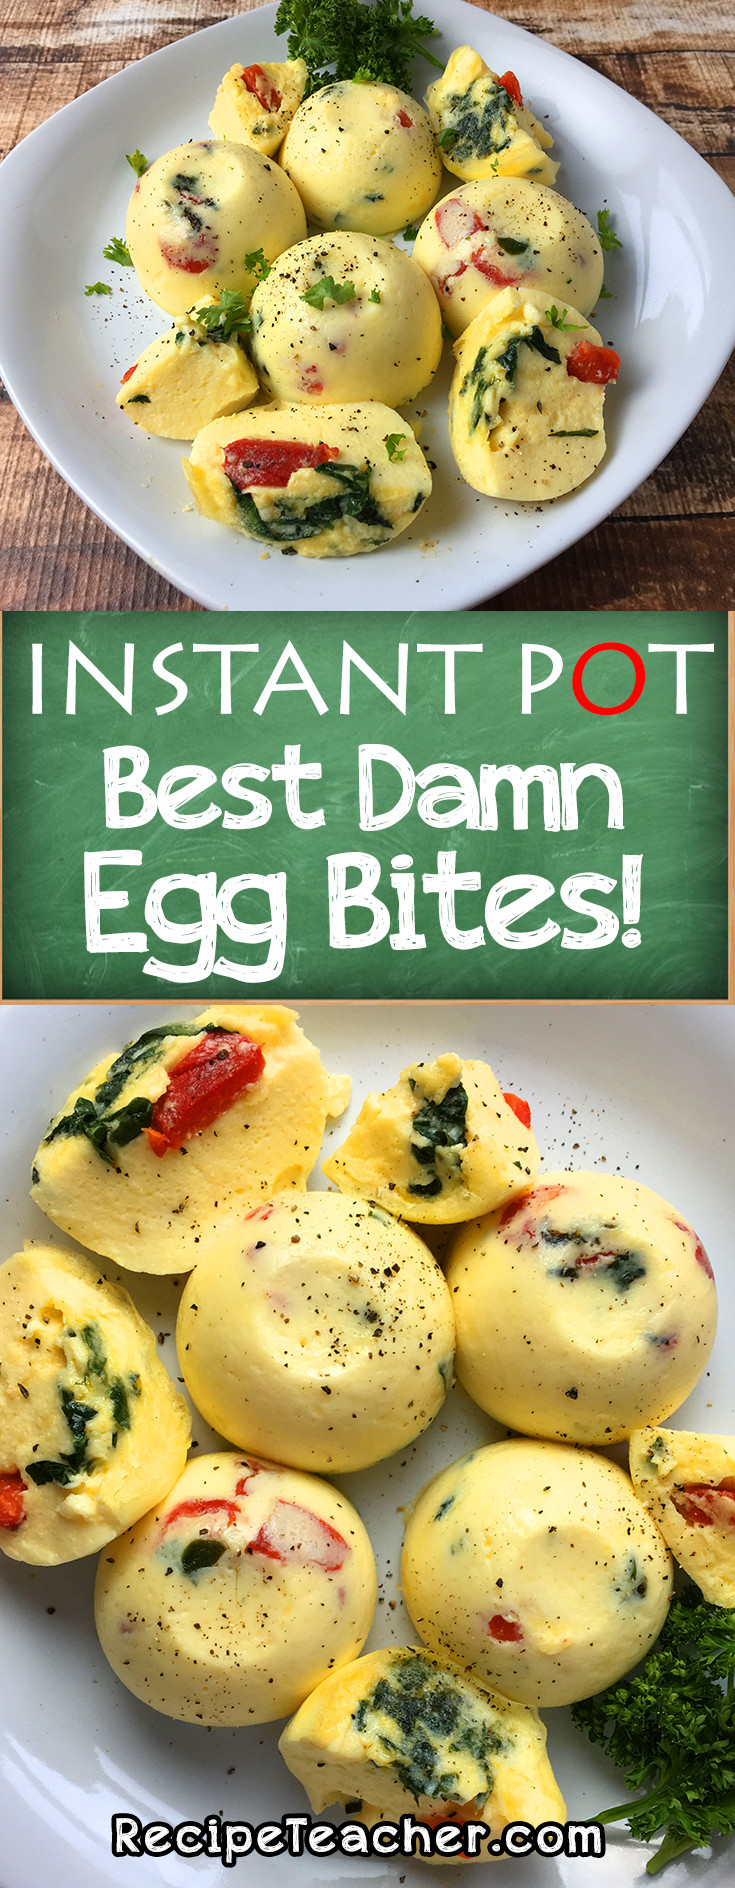 Instant Pot Egg Recipes
 Best Damn Instant Pot Egg Bites RecipeTeacher